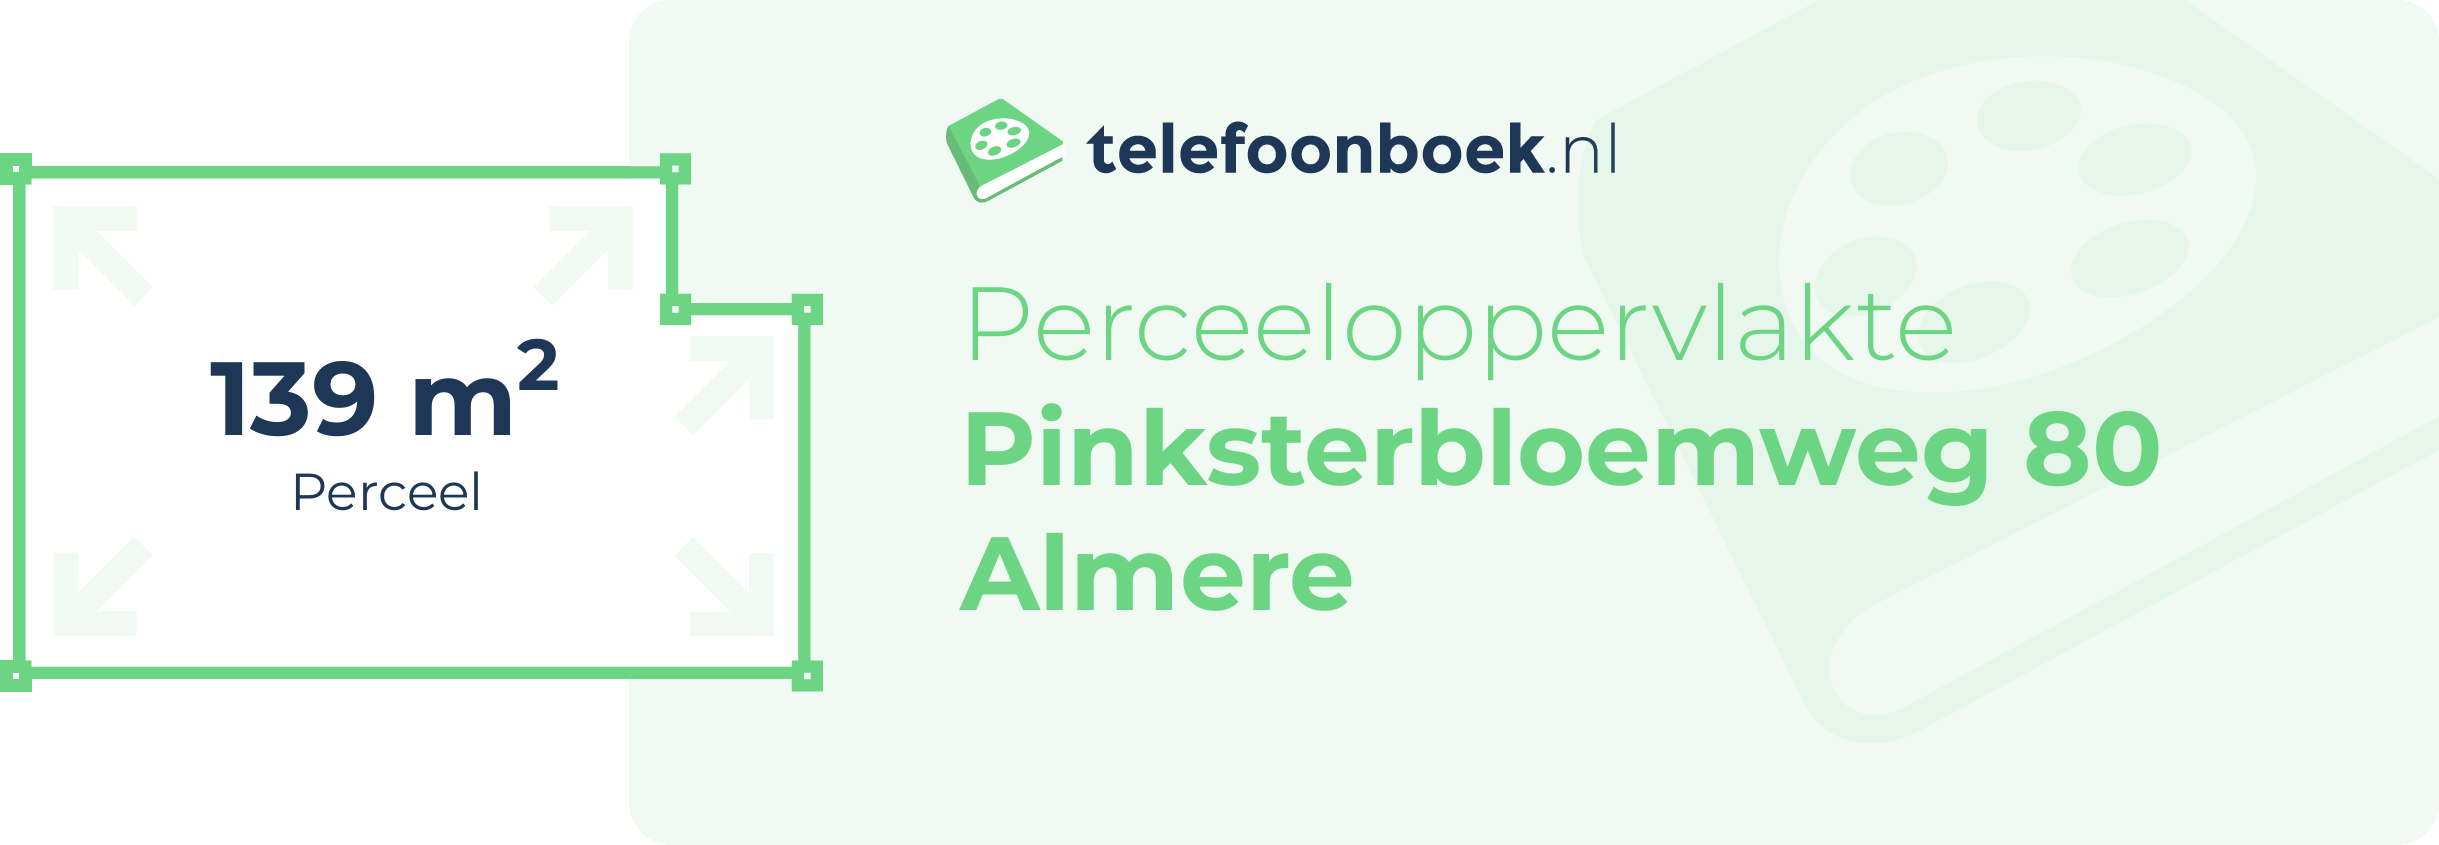 Perceeloppervlakte Pinksterbloemweg 80 Almere